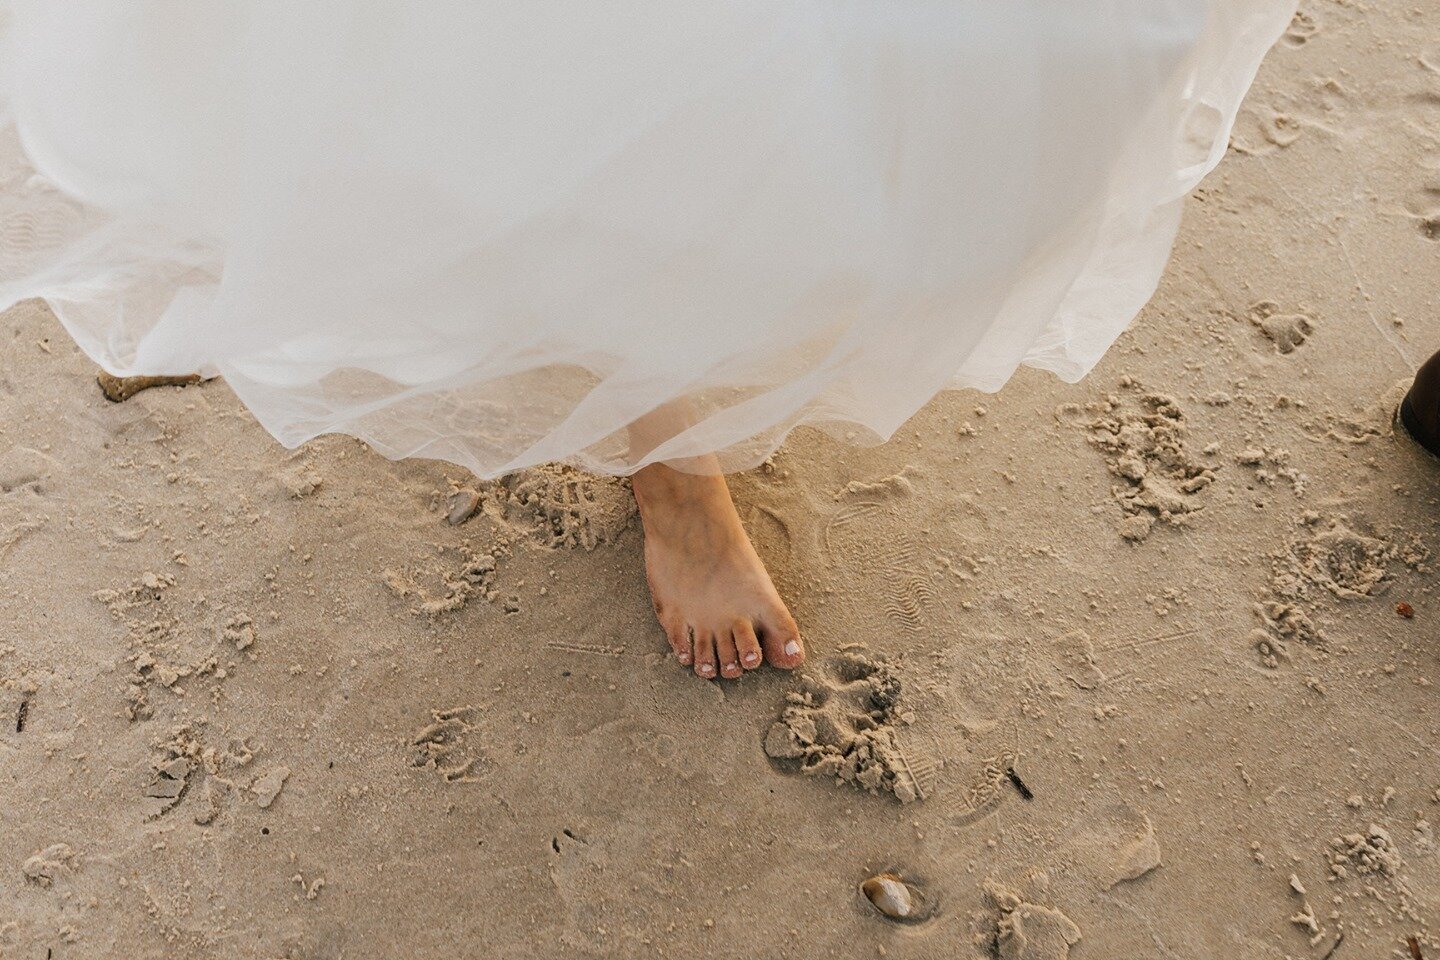 Barefoot on your wedding day? We think that's a great idea!⁠
.⁠
.⁠
.⁠
.⁠
#ourwildloveelopements #weddingphotography #wedding #weddinginspiration #ourwildloveelopements #littlecarphotography  #elopement #wanderingphotographers #lookslikefilm #elopemen